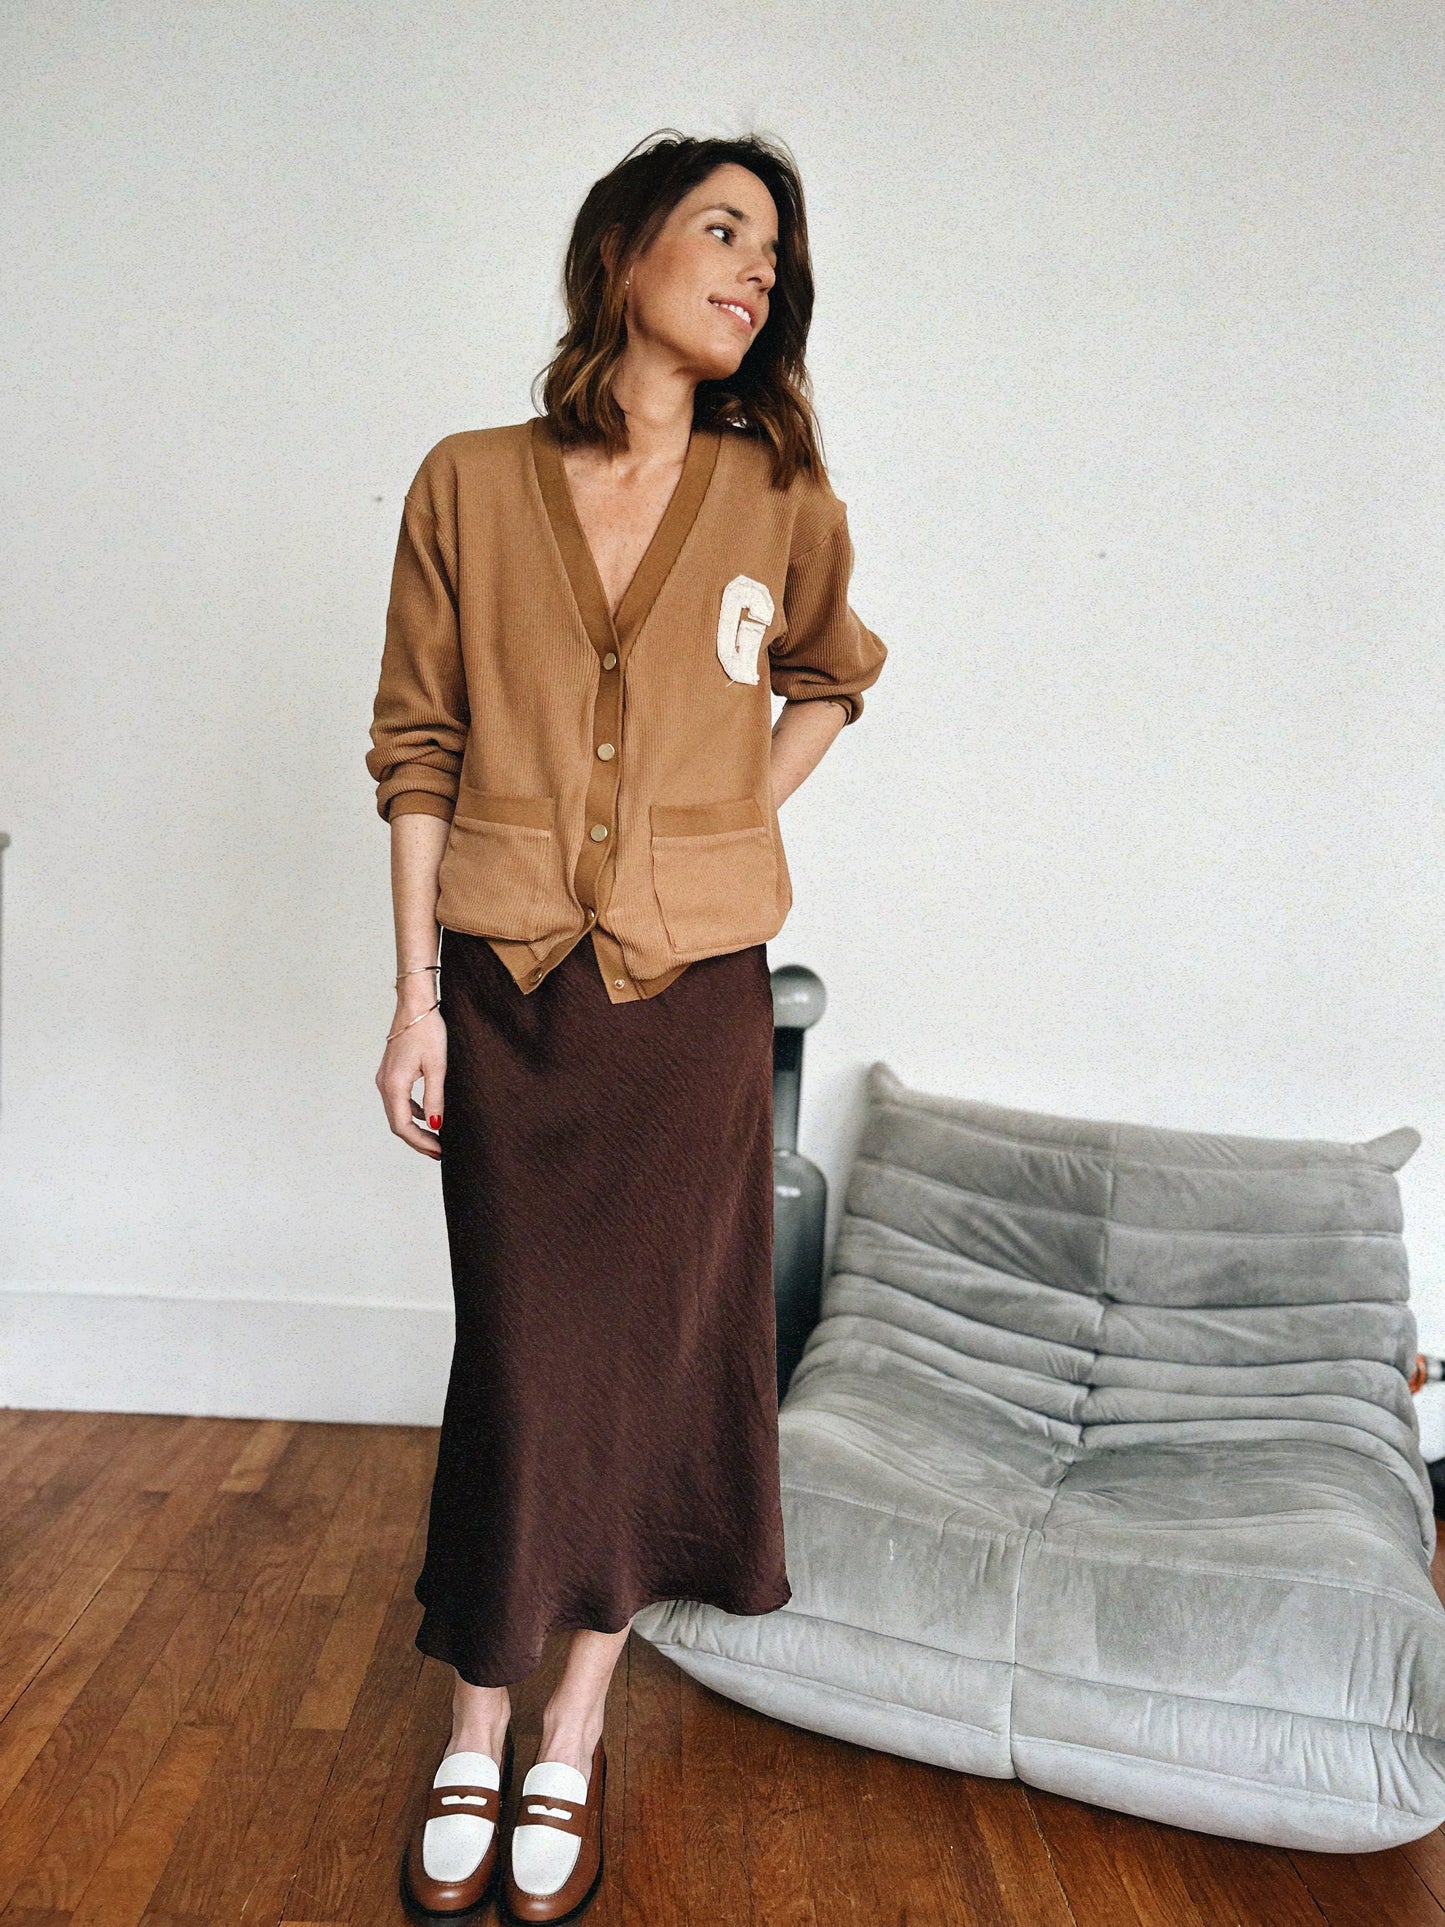 The Royale skirt - brown